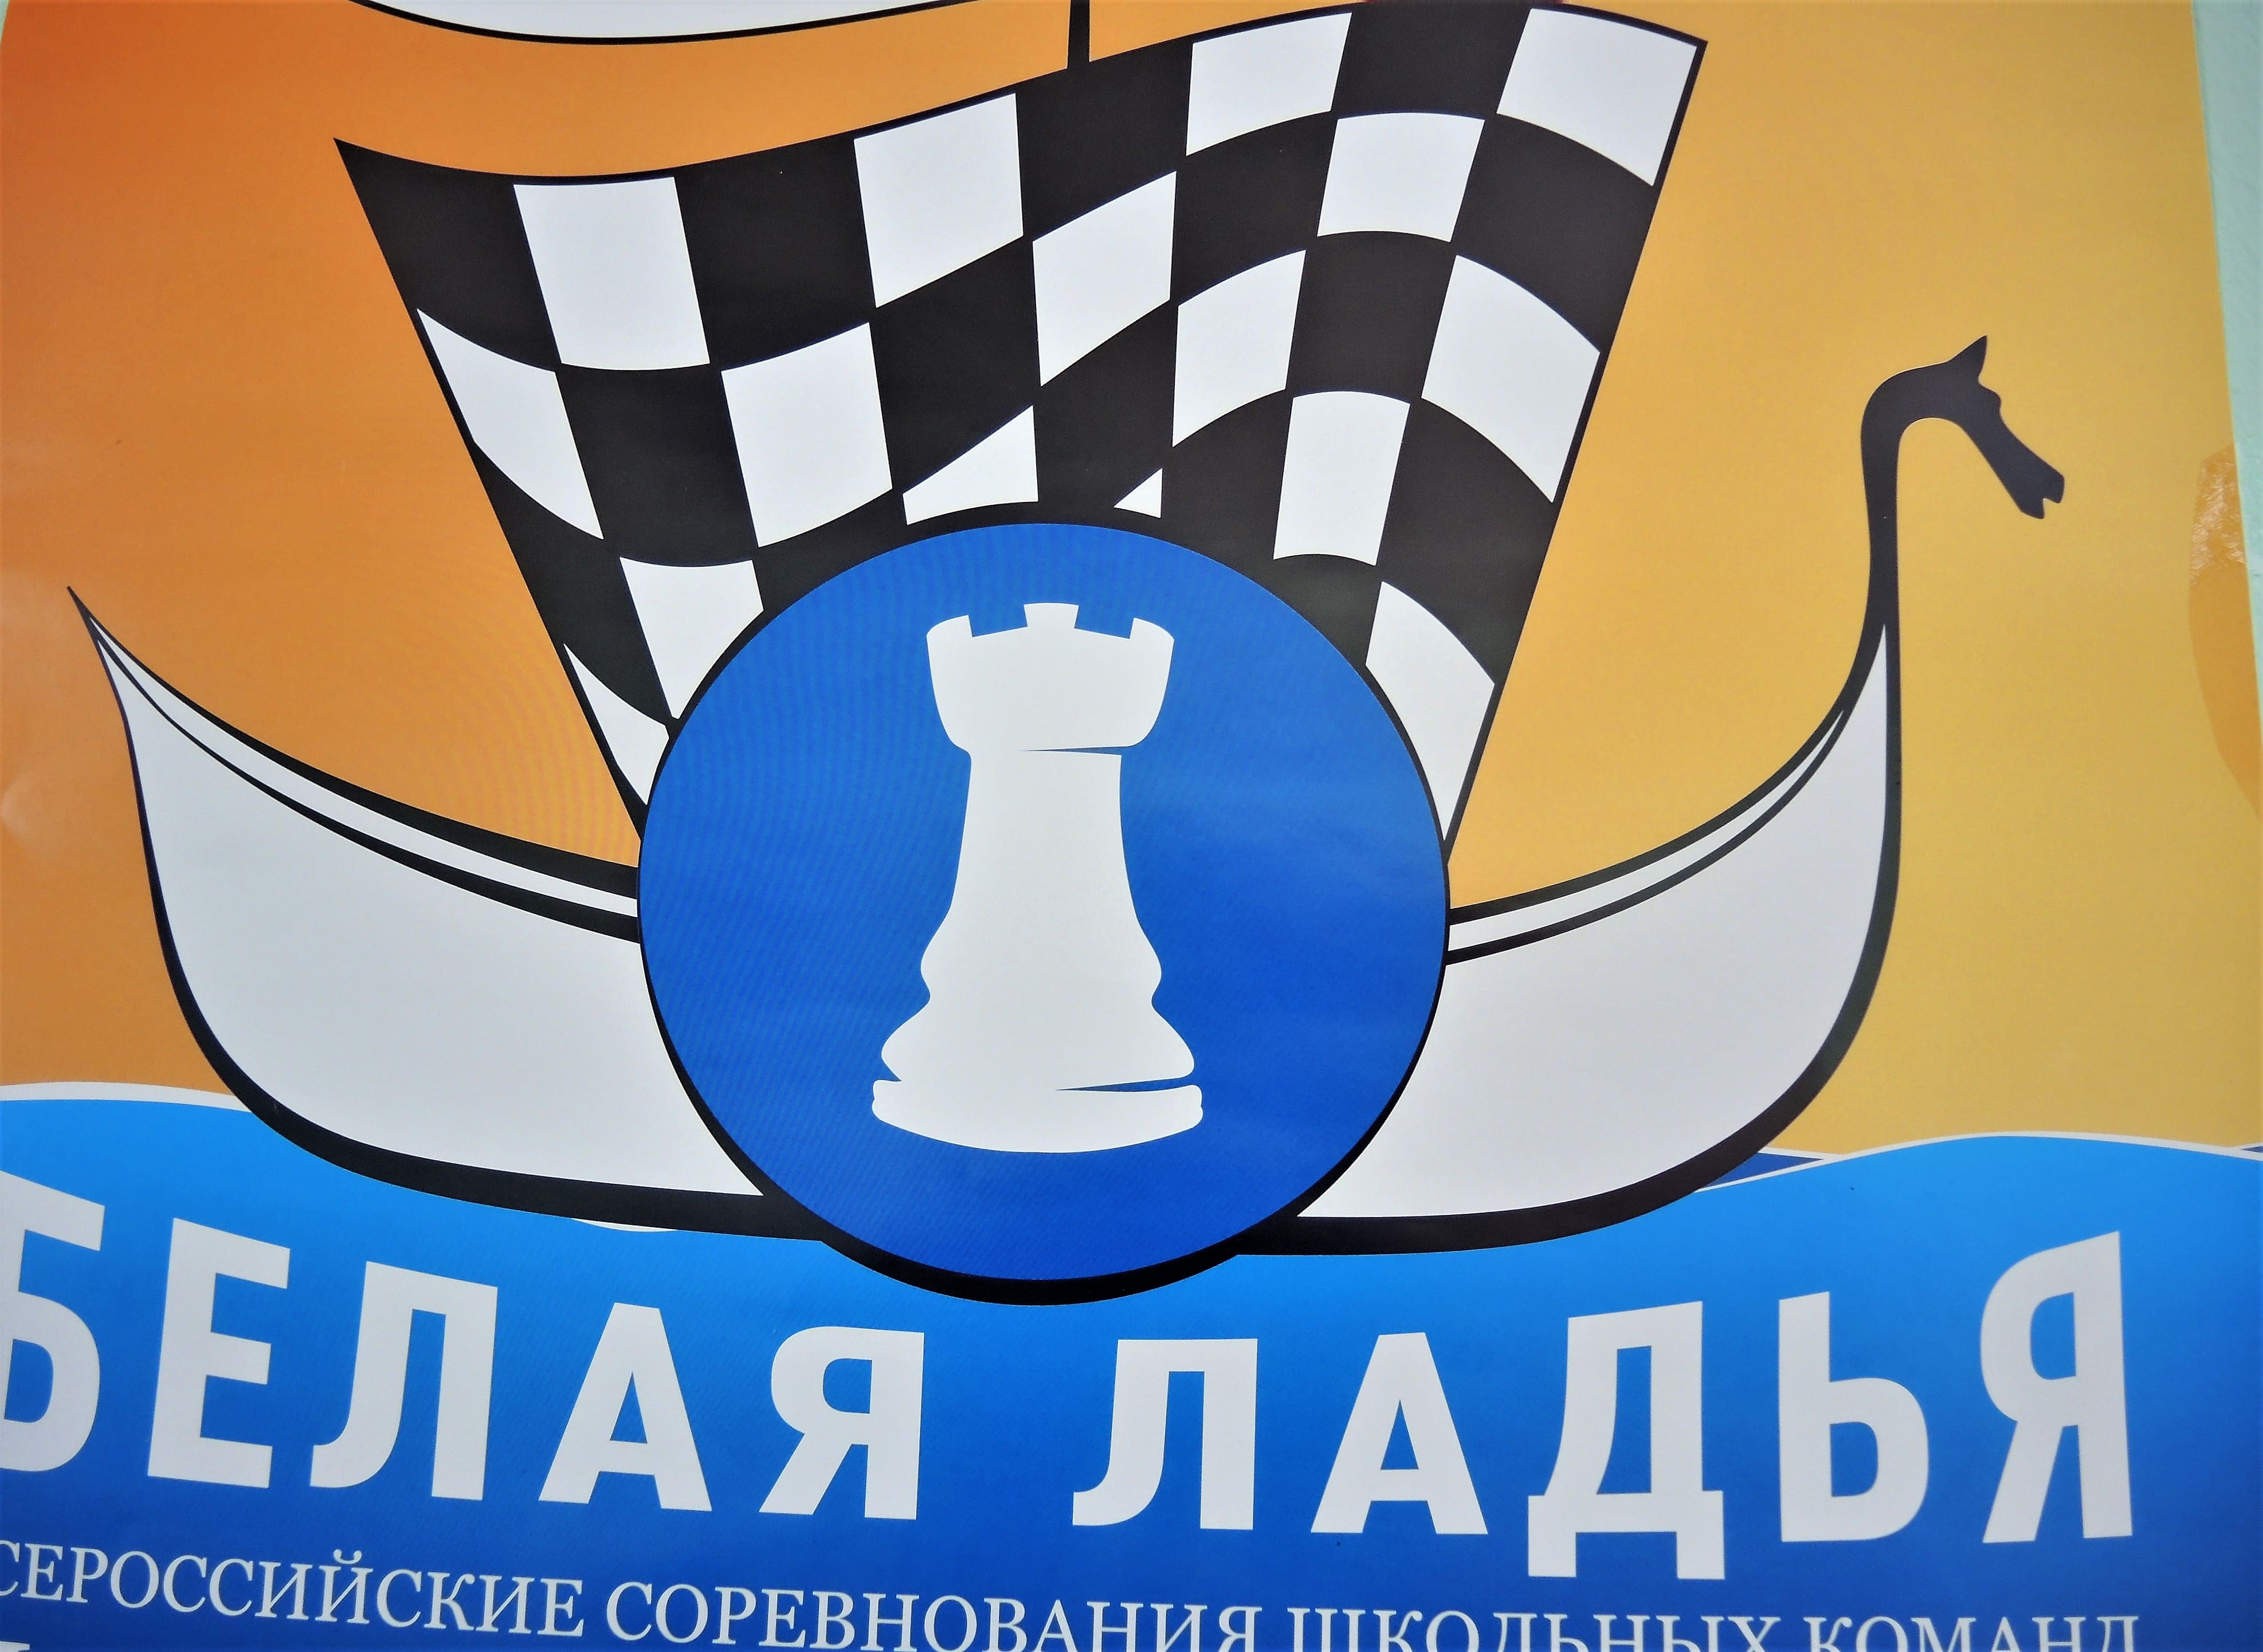 Ладья песни. Турнир по шахматам белая Ладья. Белая Ладья Ольгинка 2022. Белая Ладья 2022 шахматы. Соревнований по шахматам «белая Ладья».